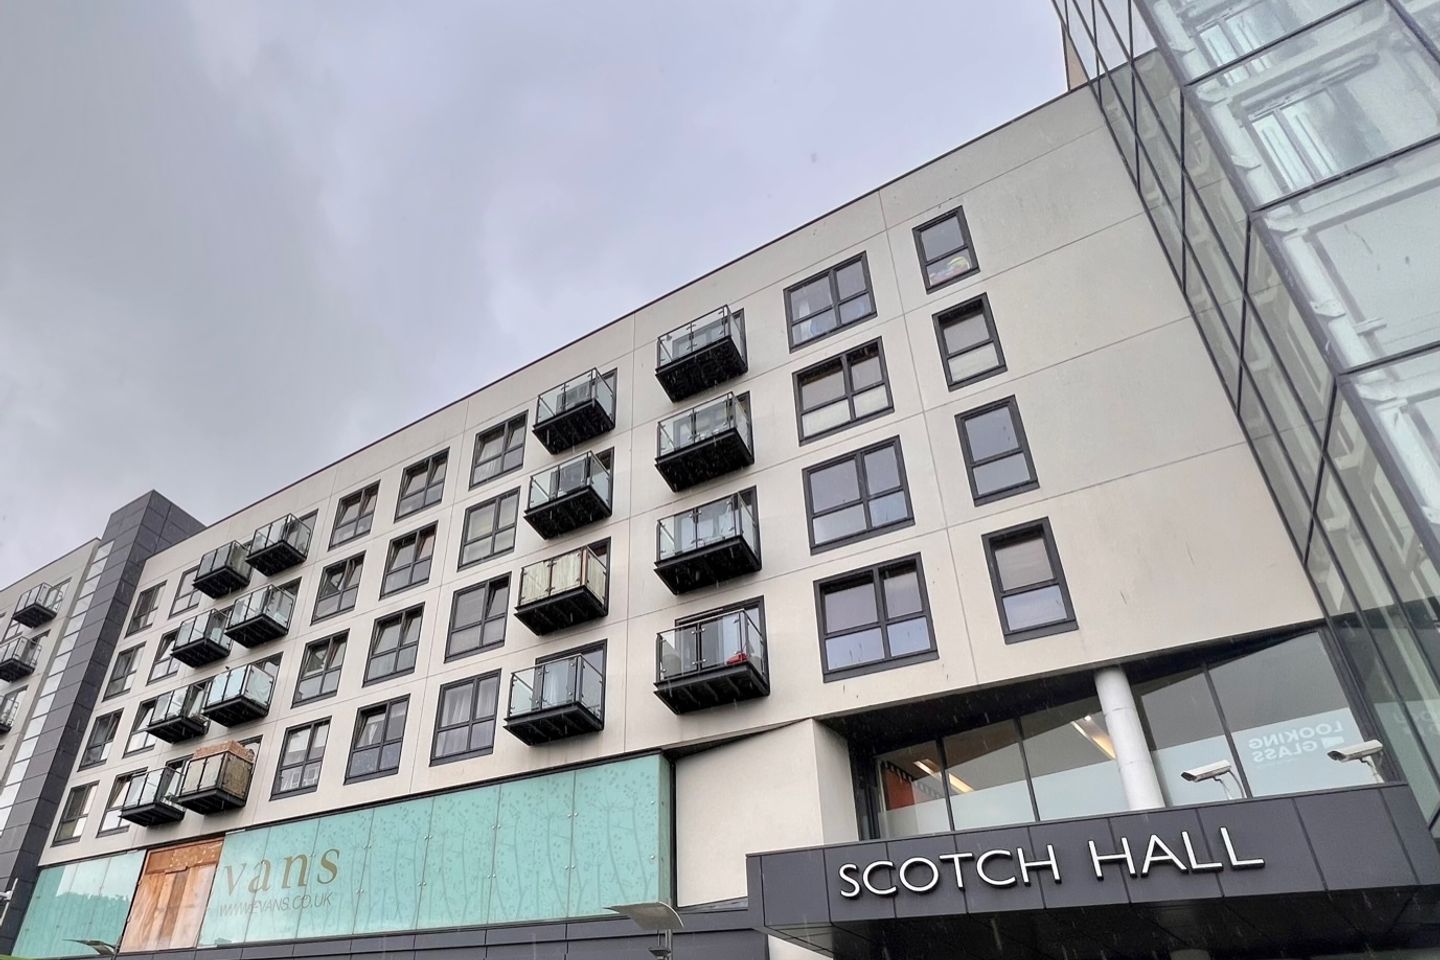 56 Scotch Hall Apartments, Scotch Hall Shopping Centre, Drogheda, Co. Louth